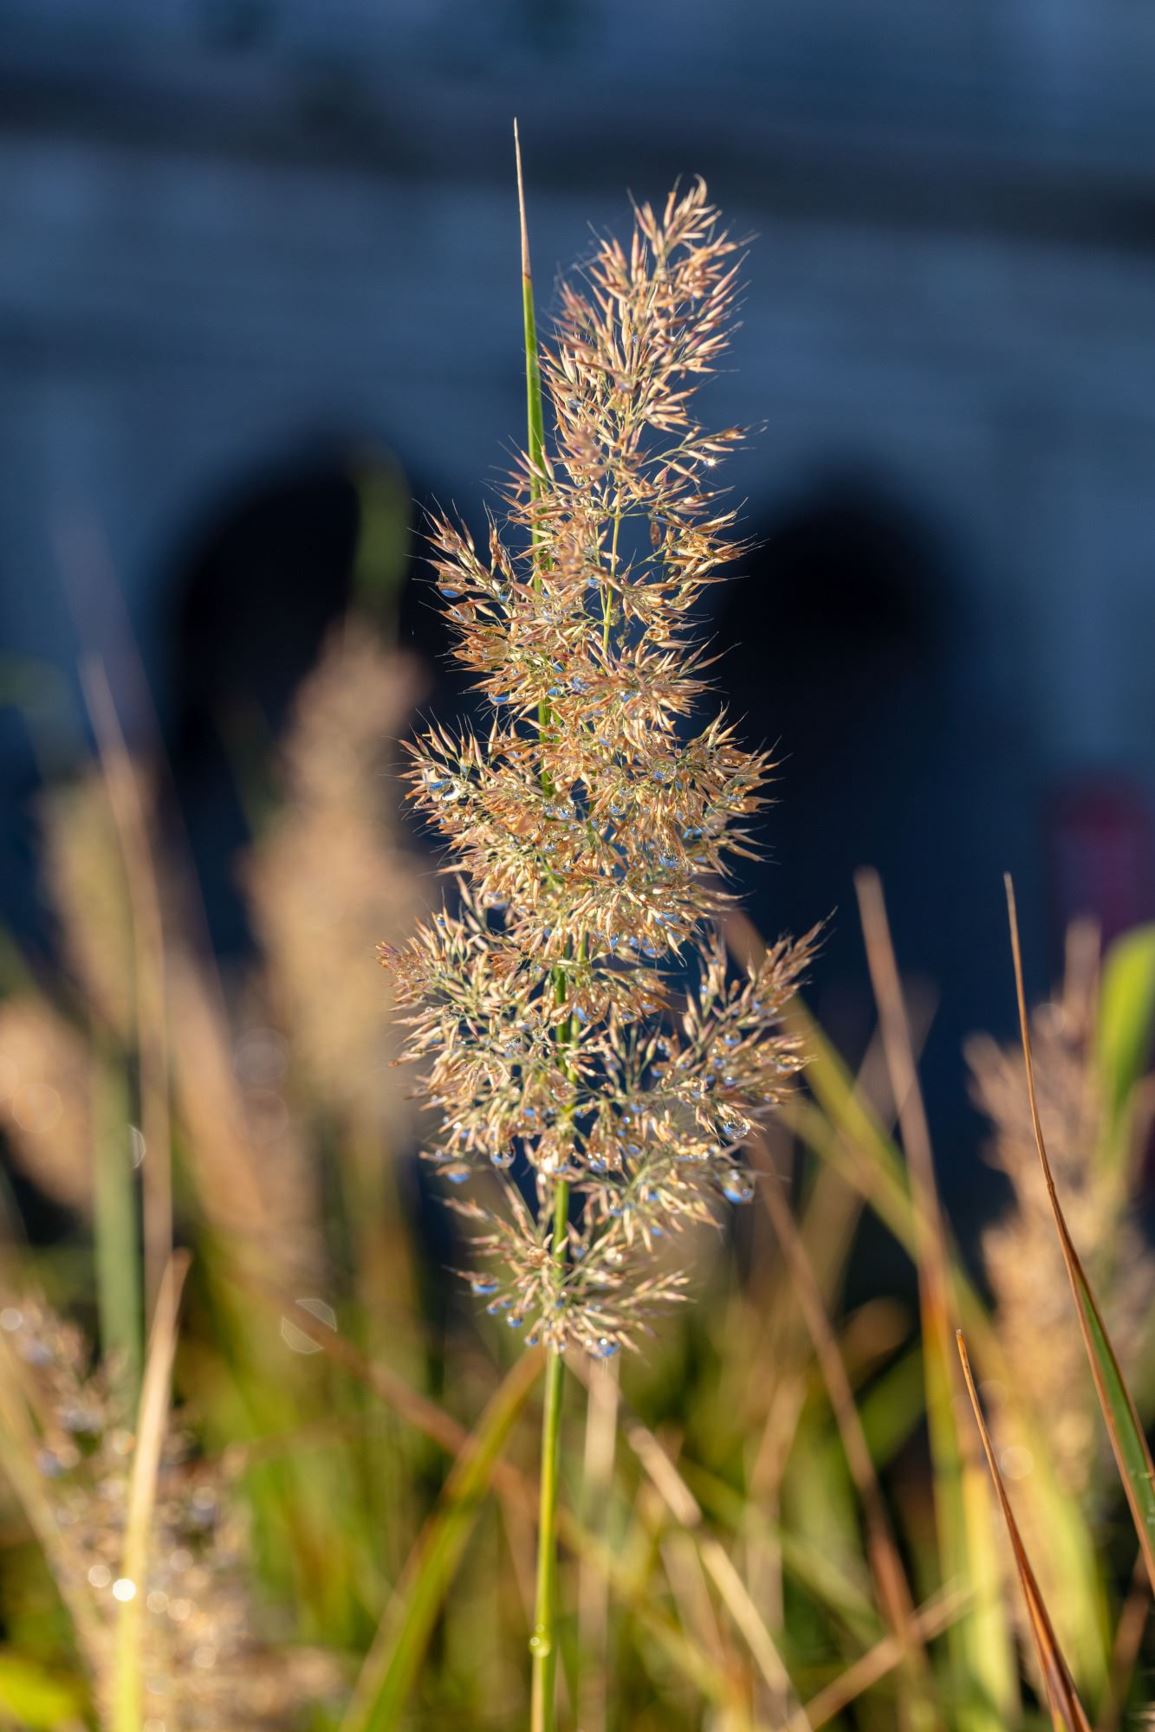 Calamagrostis arundinacea - Feather reed grass, Foxtail grass, Reed grass